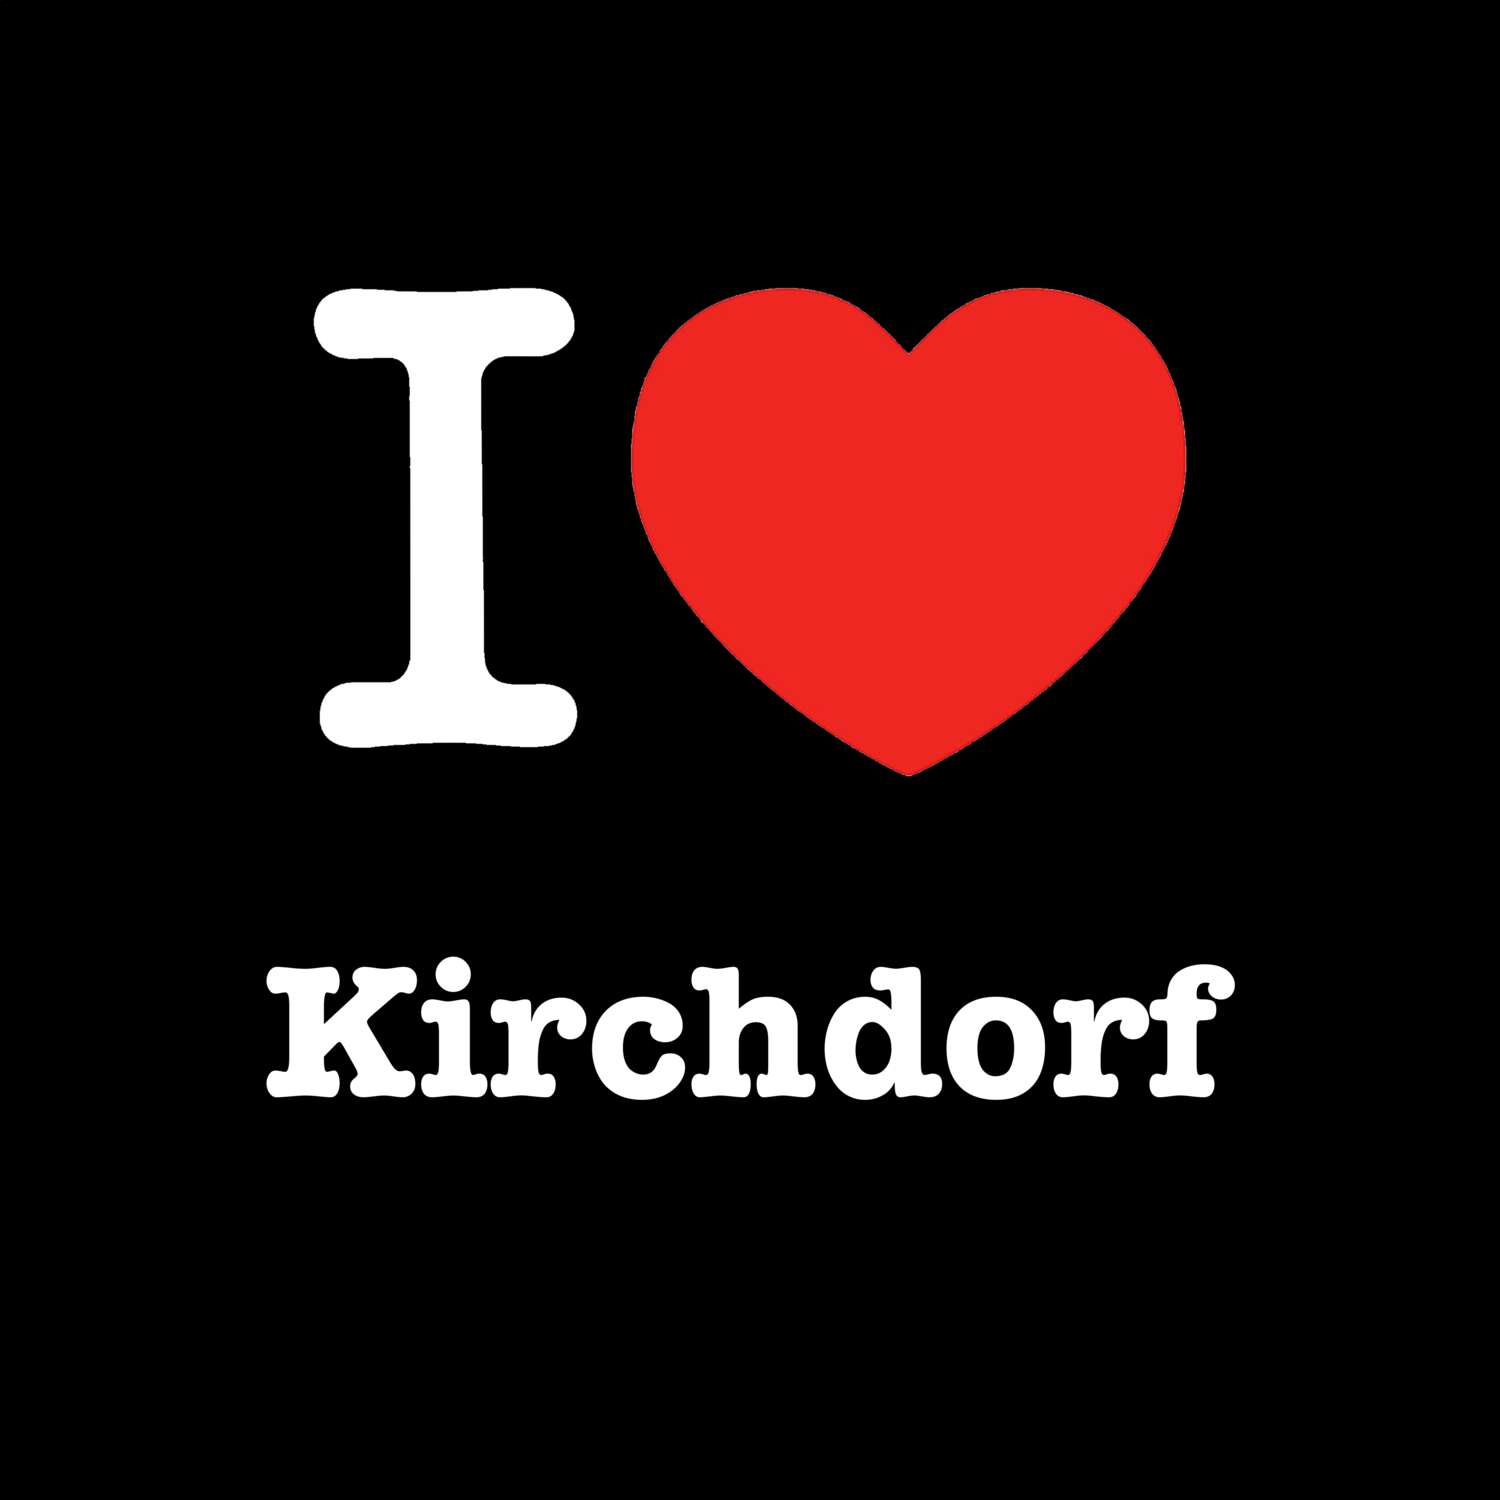 Kirchdorf T-Shirt »I love«